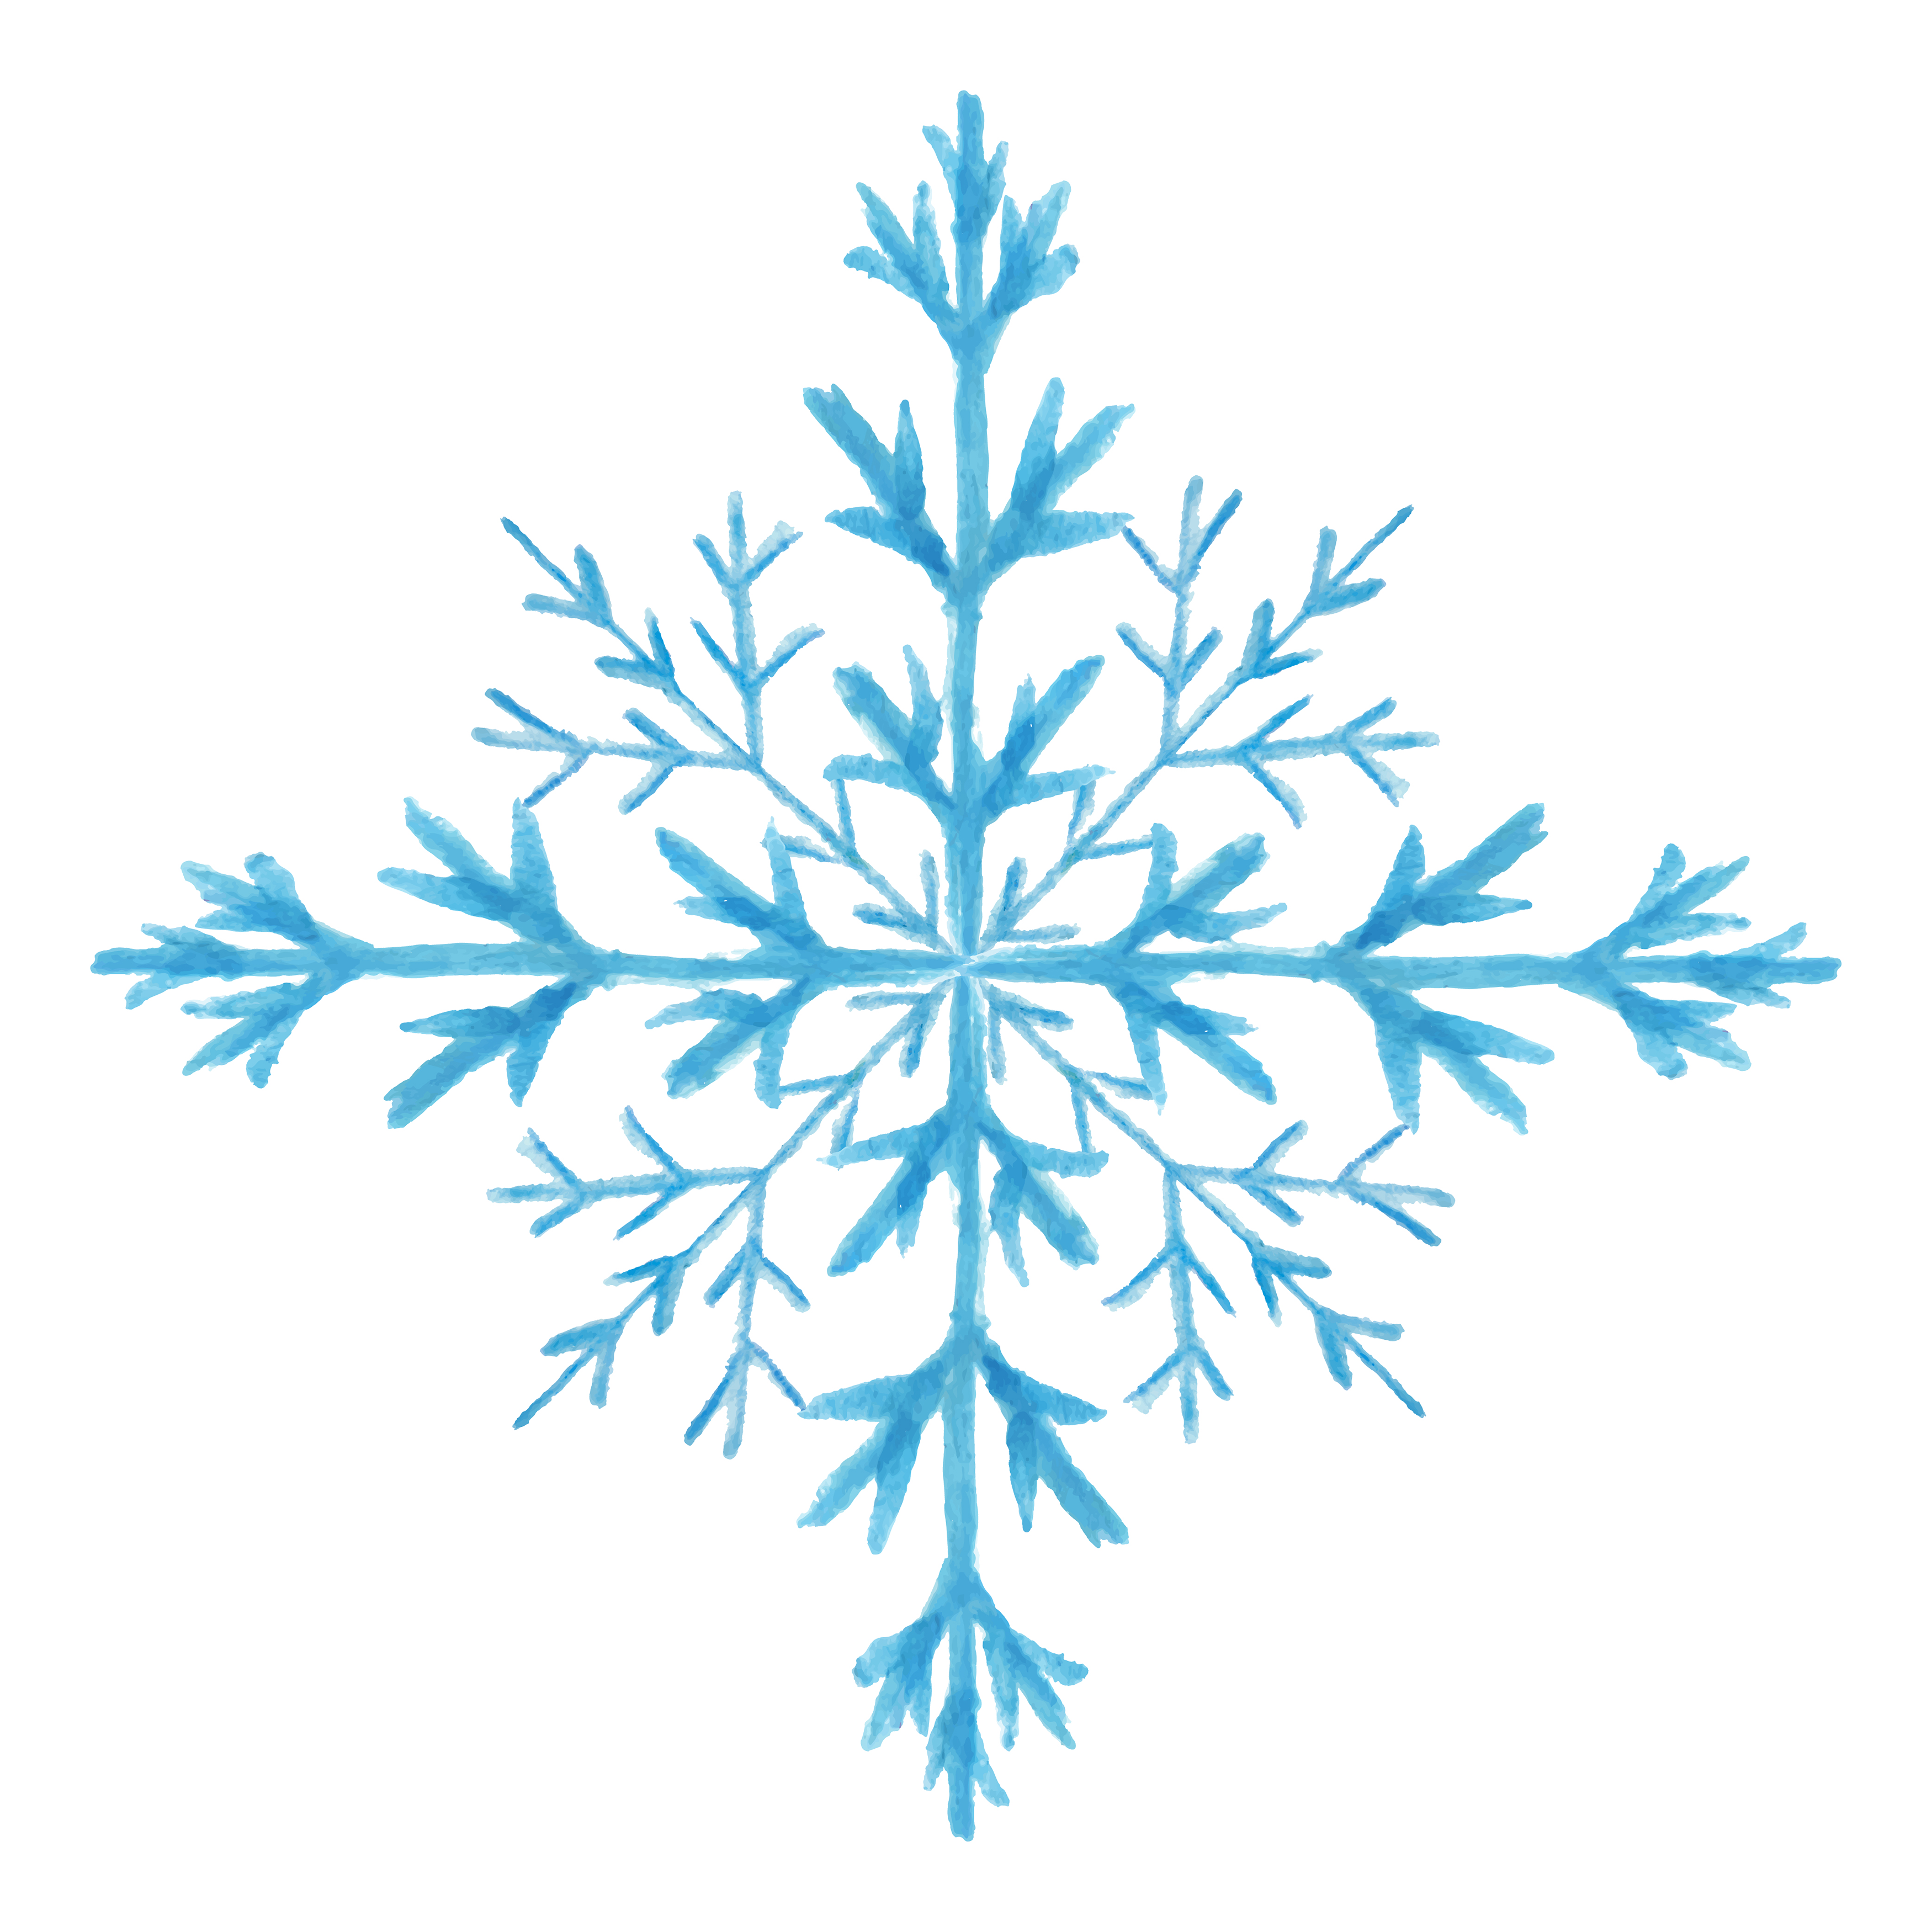 Snowflake Download - Hand-painted watercolor snowflake pattern material